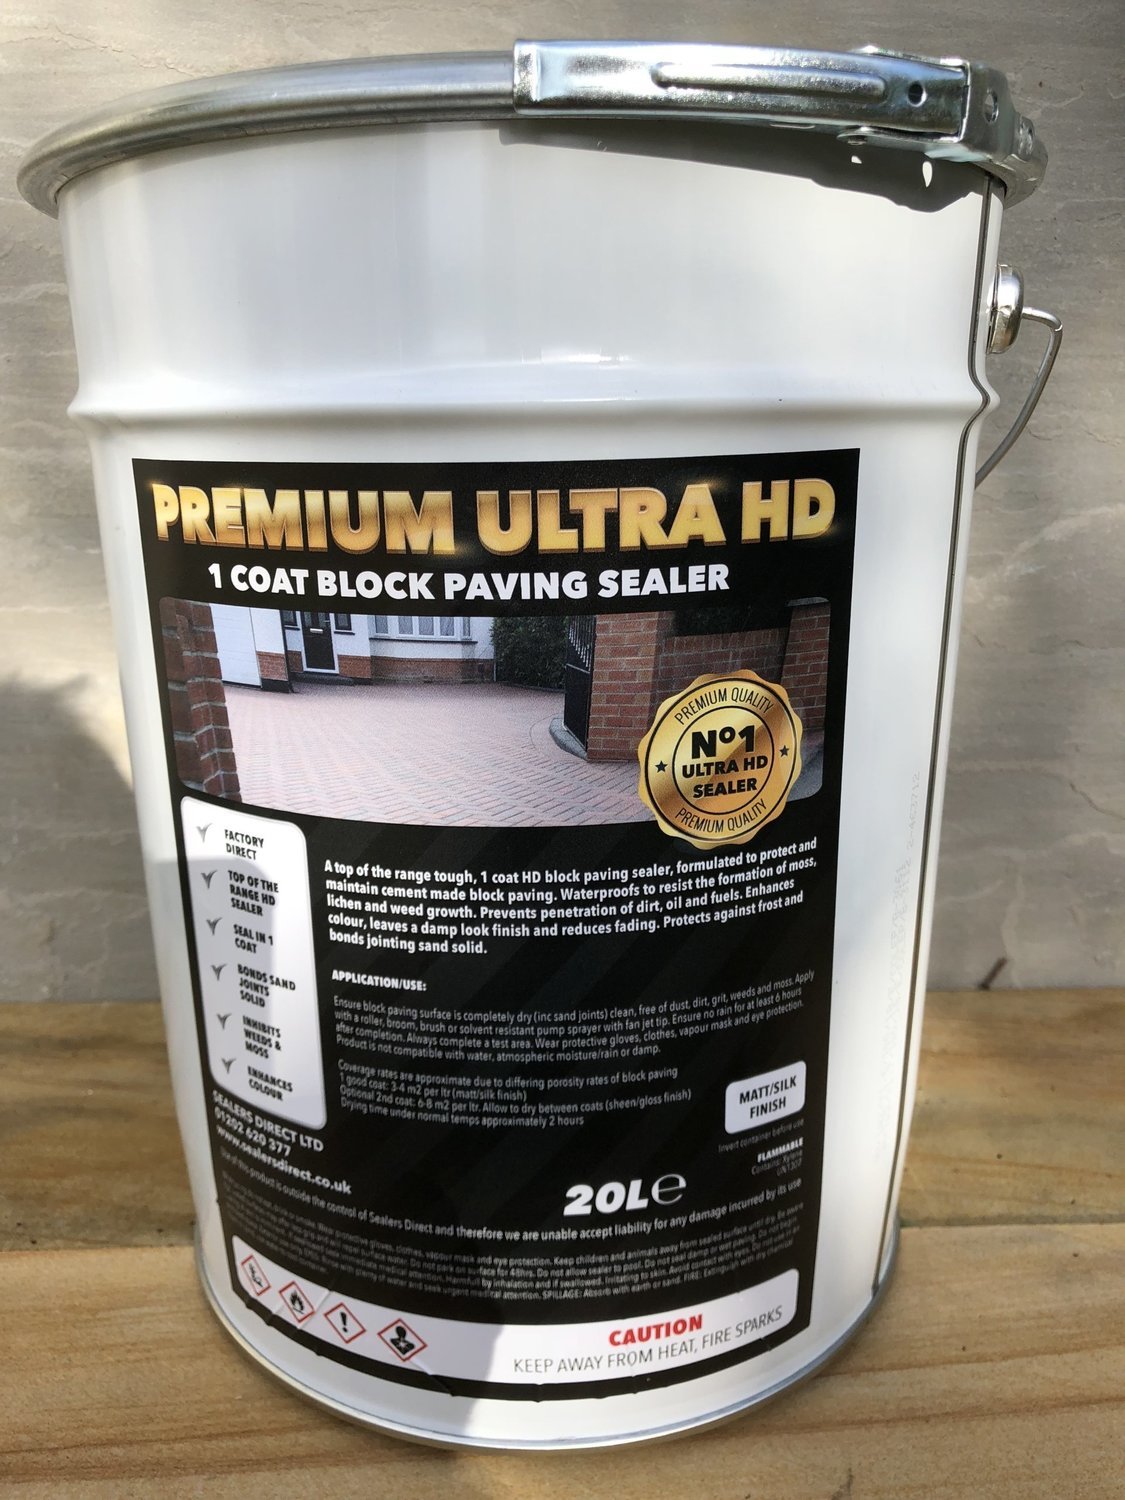 One Coat Premium Ultra HD block paving sealer